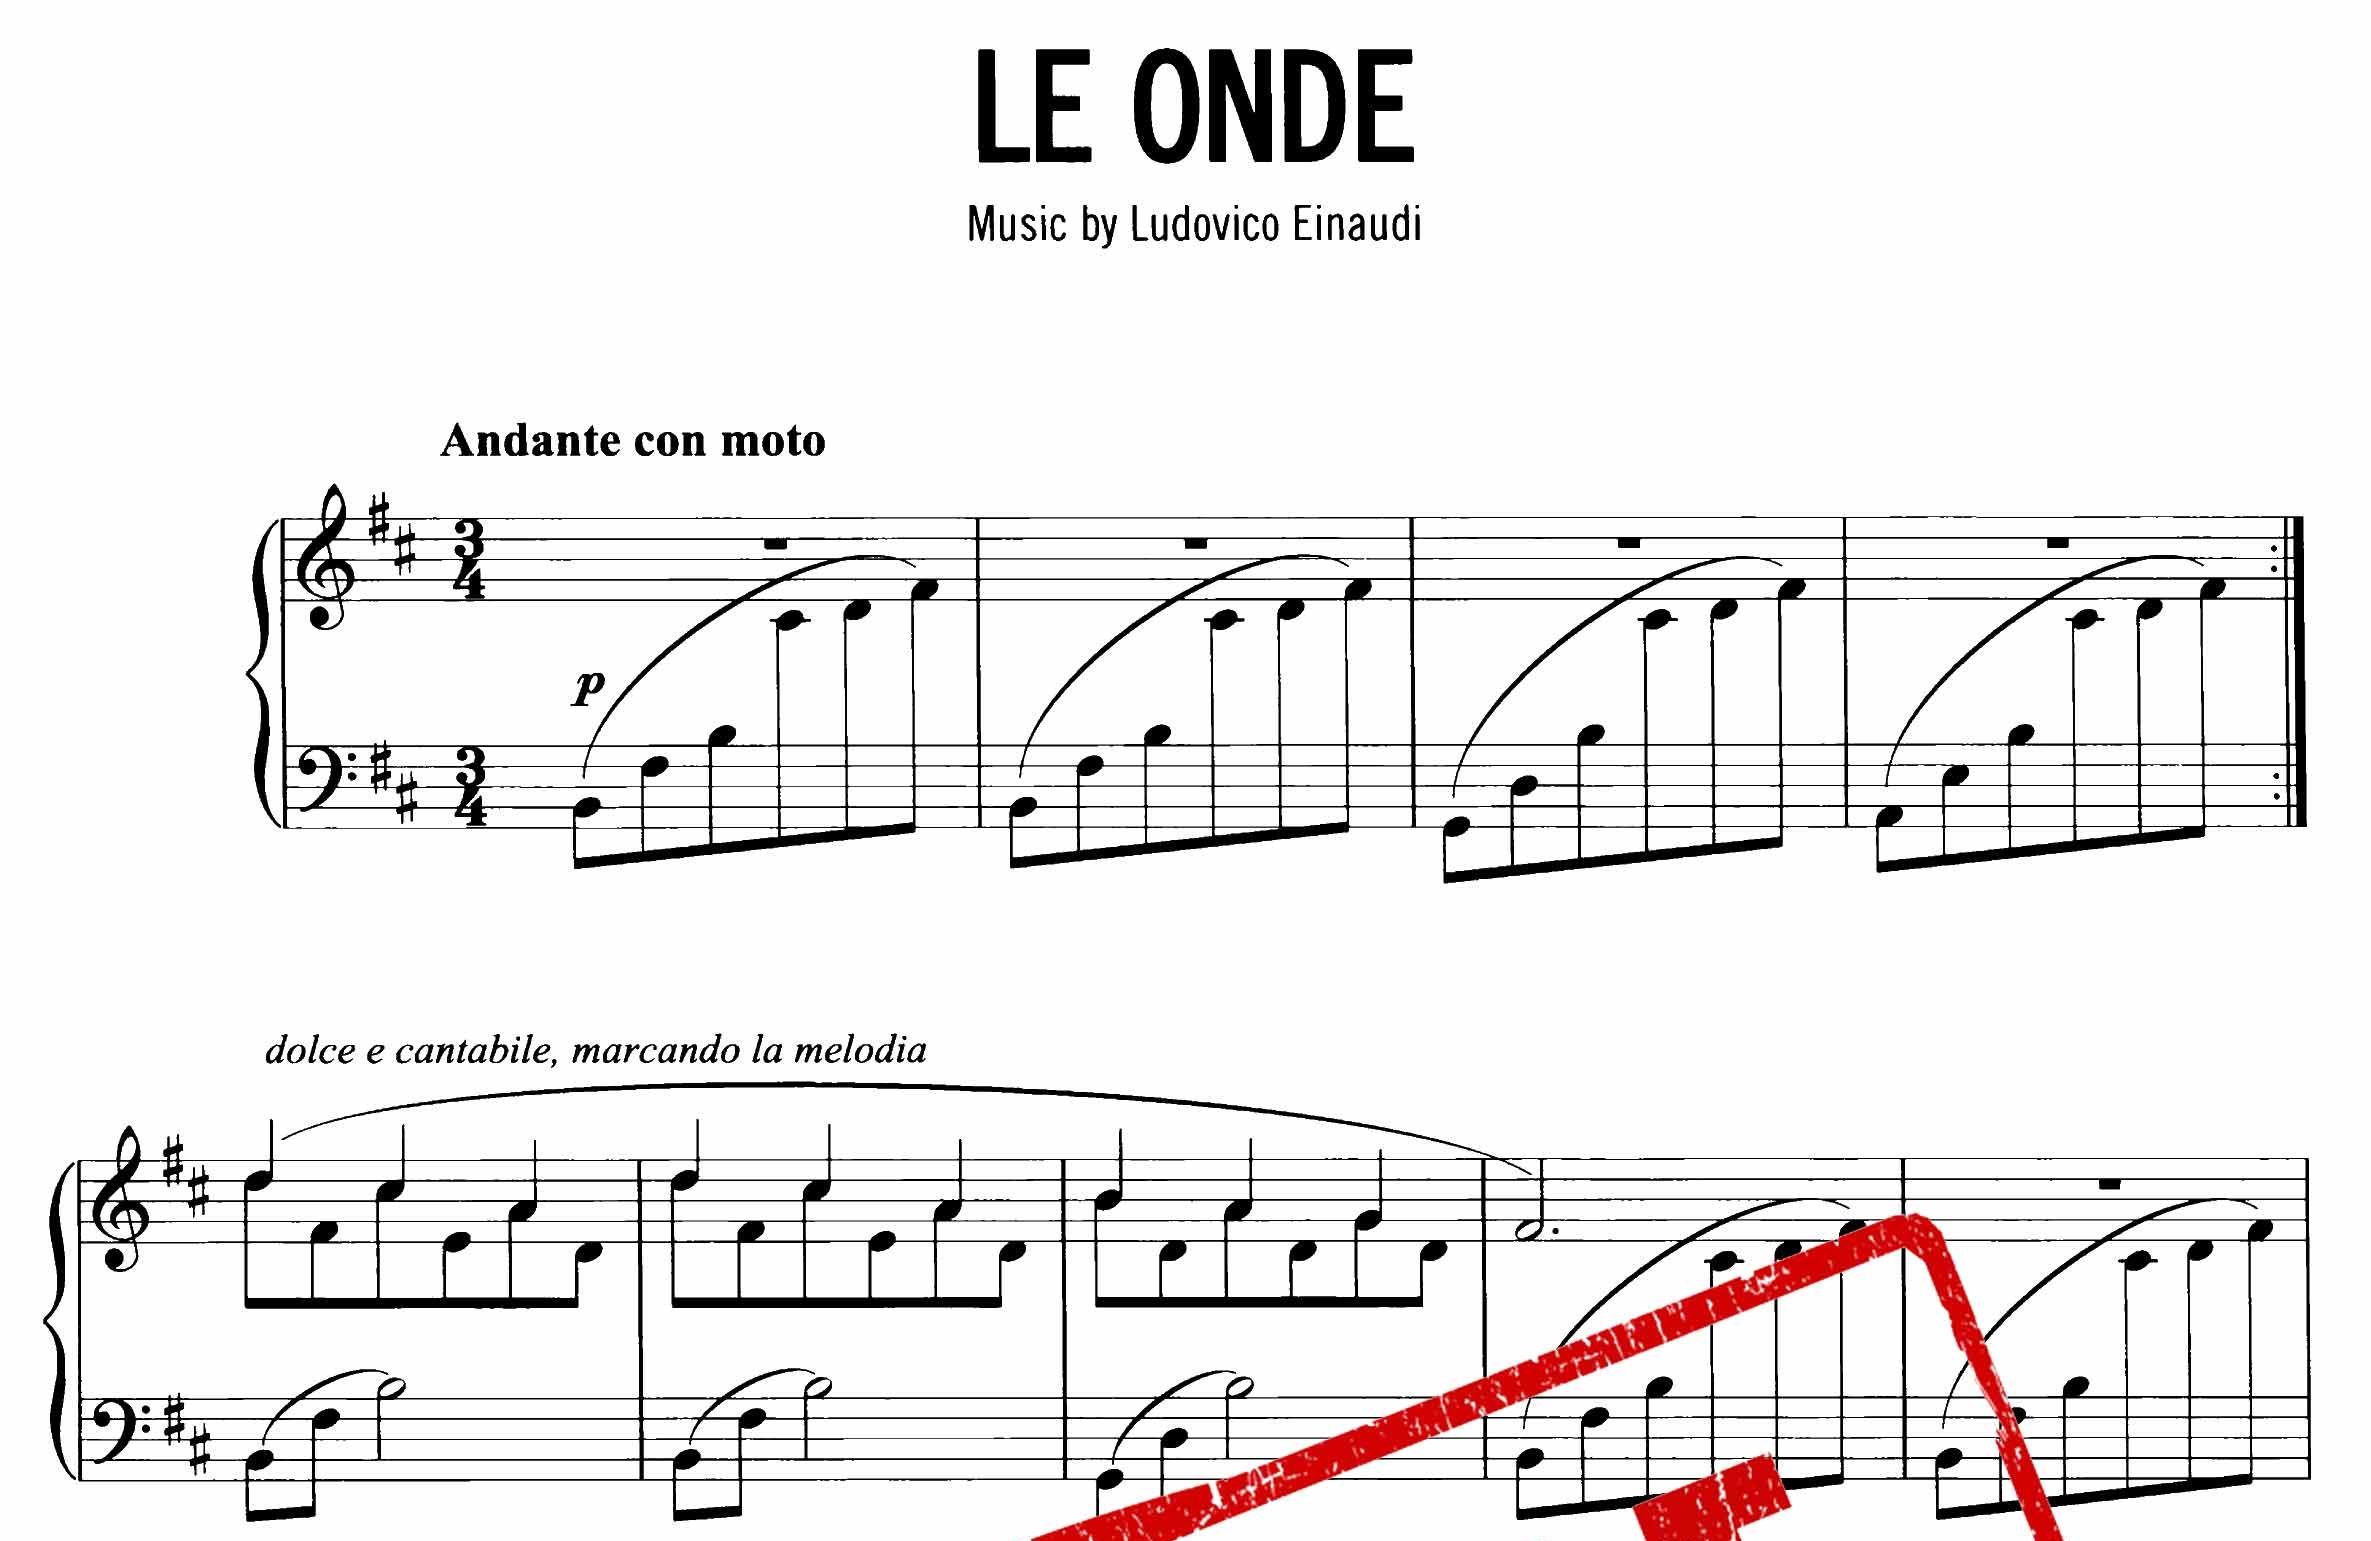 نت پیانوی Le onde از لودویکو اناودی